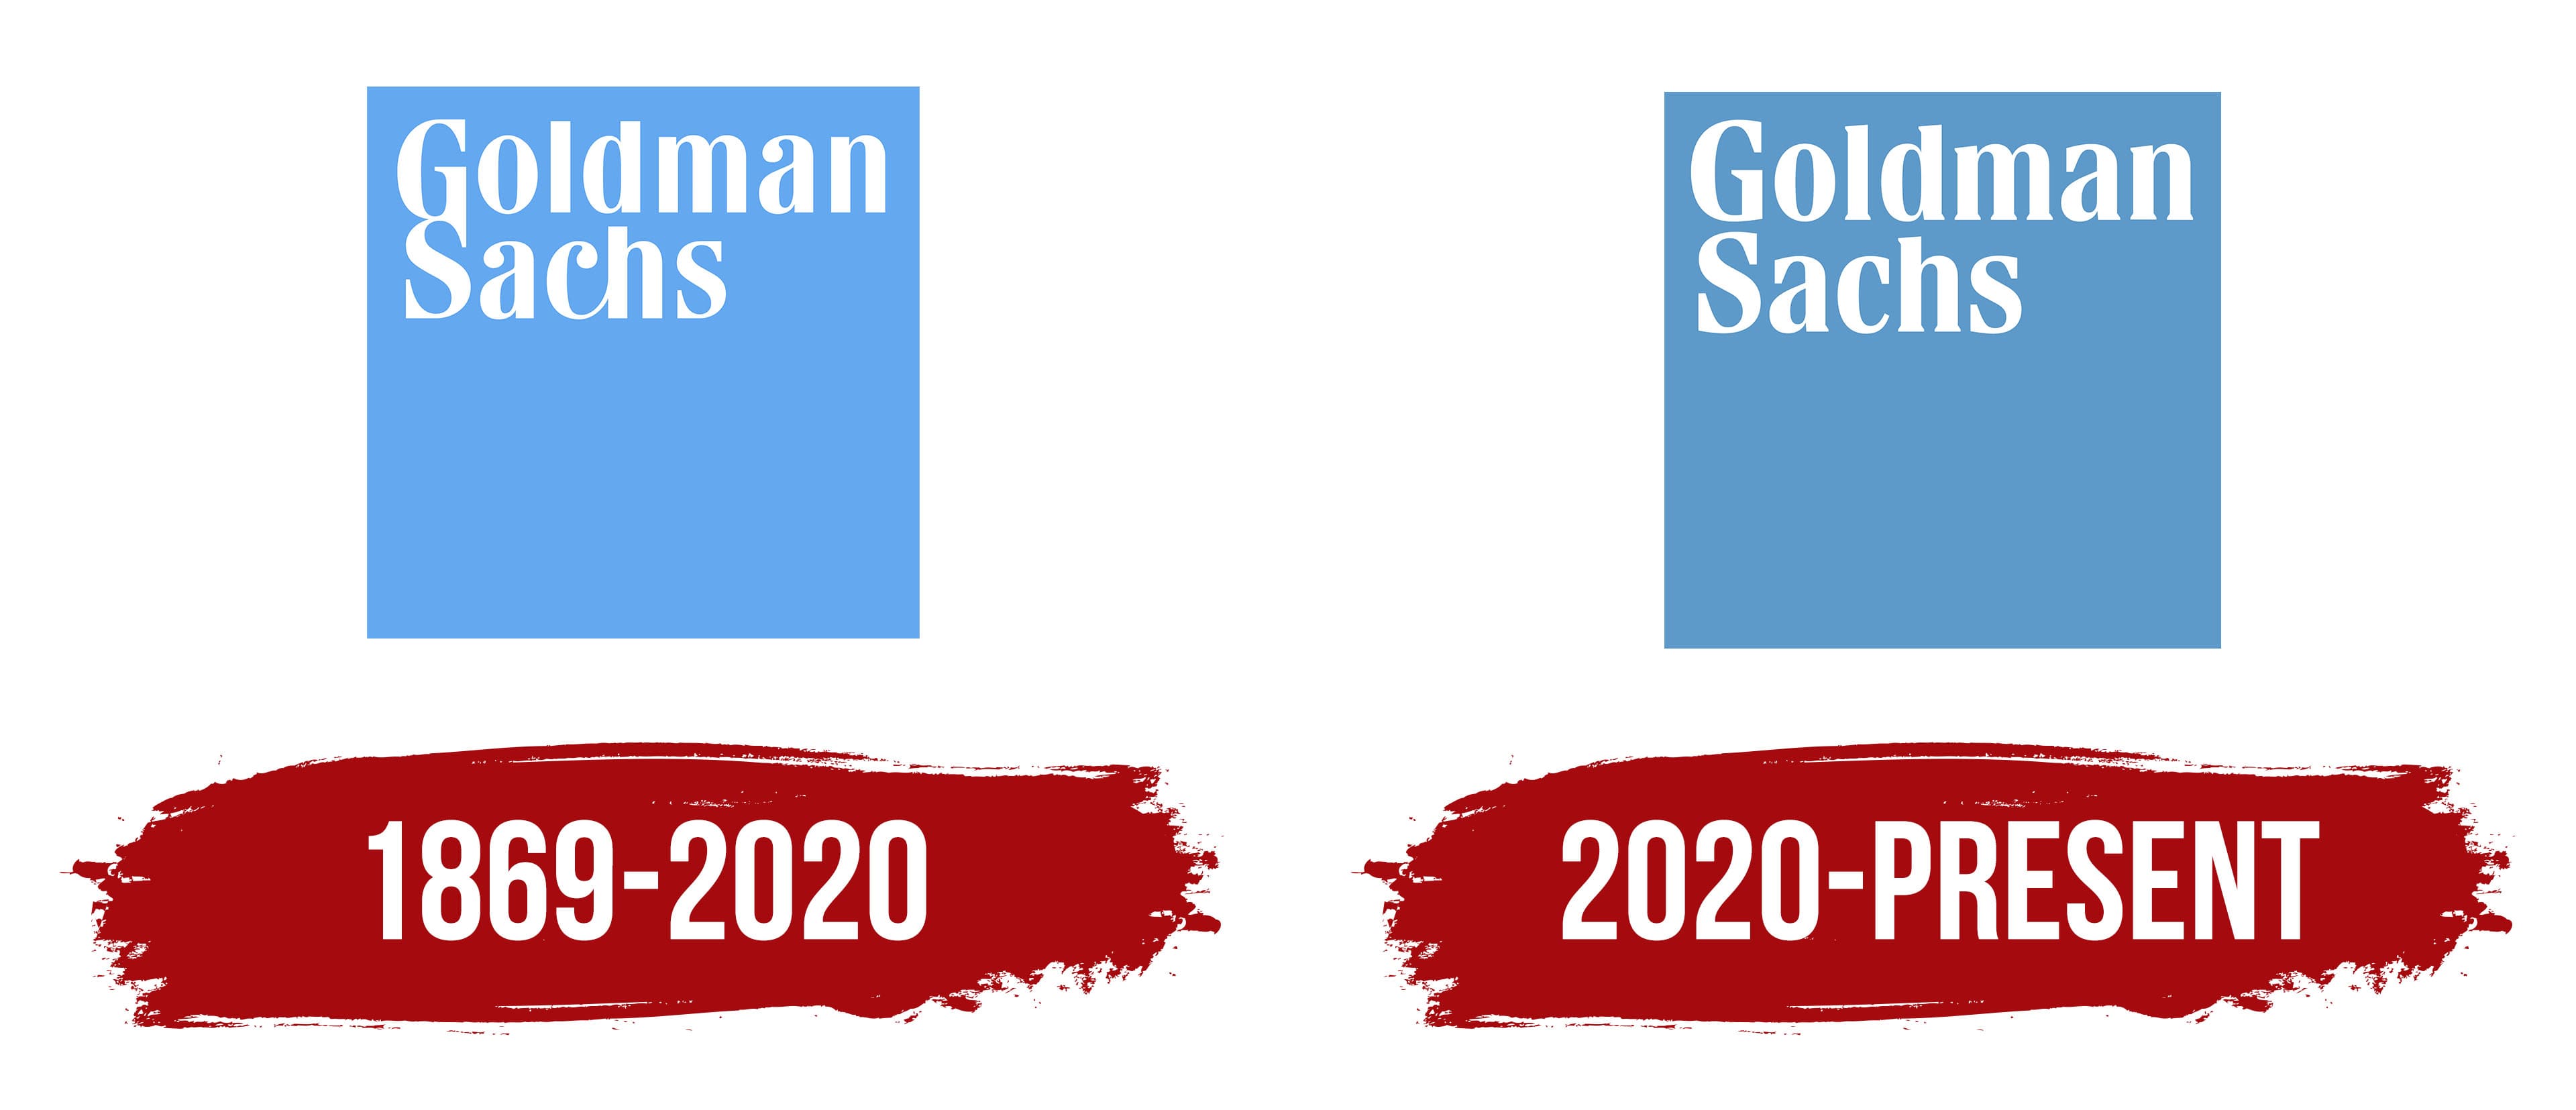 goldman sachs logo color